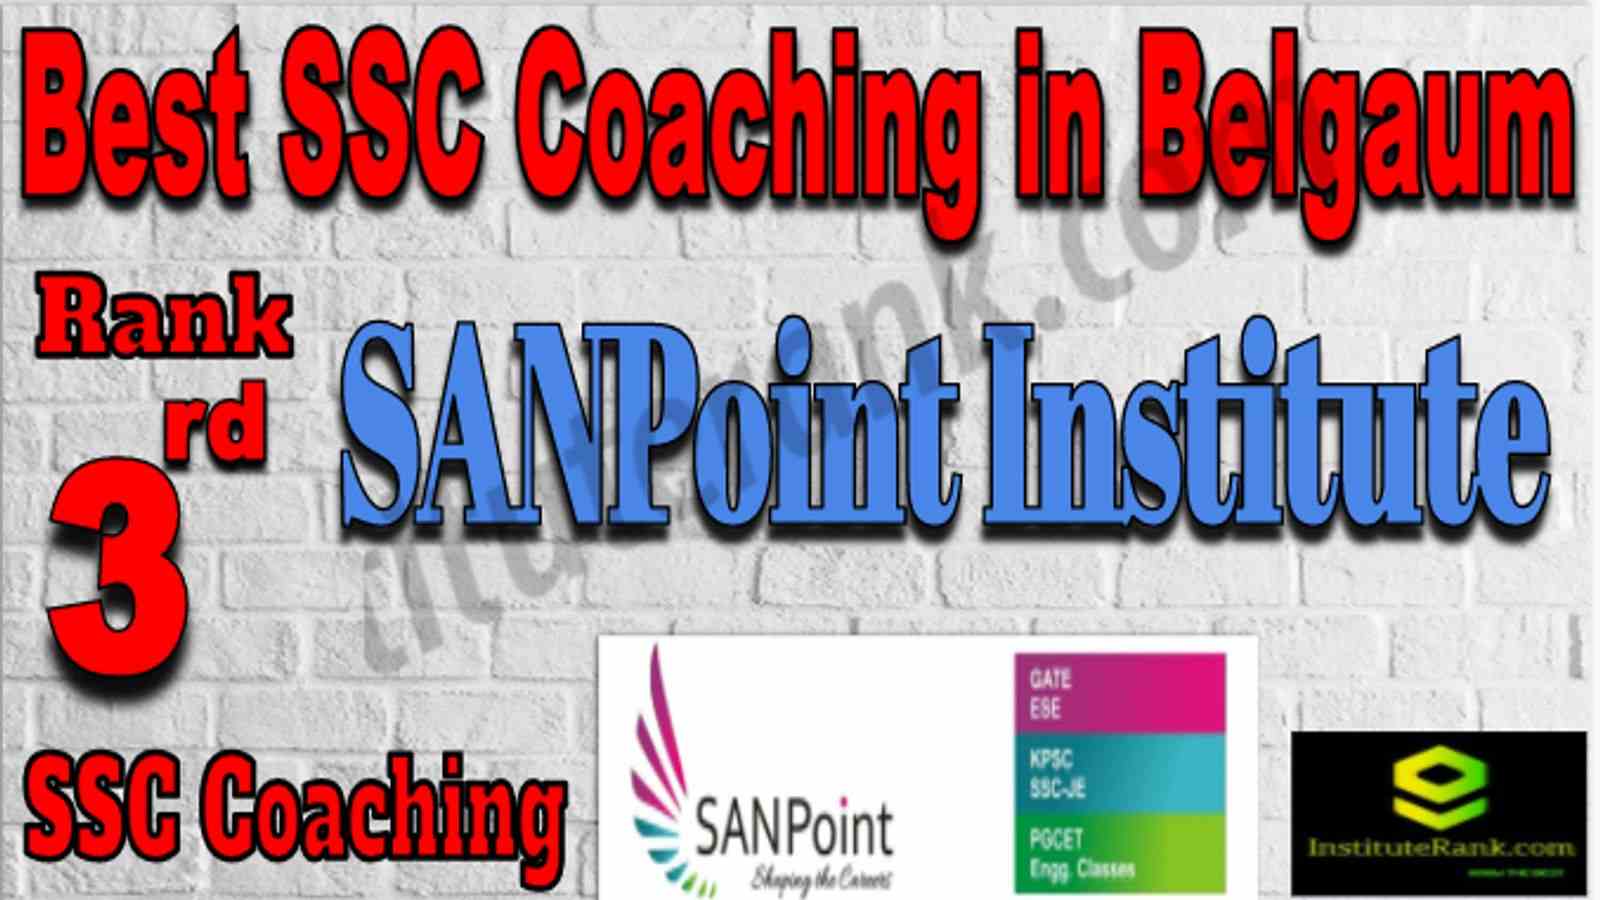 Rank 3 Best SSC Coaching in Belgaum